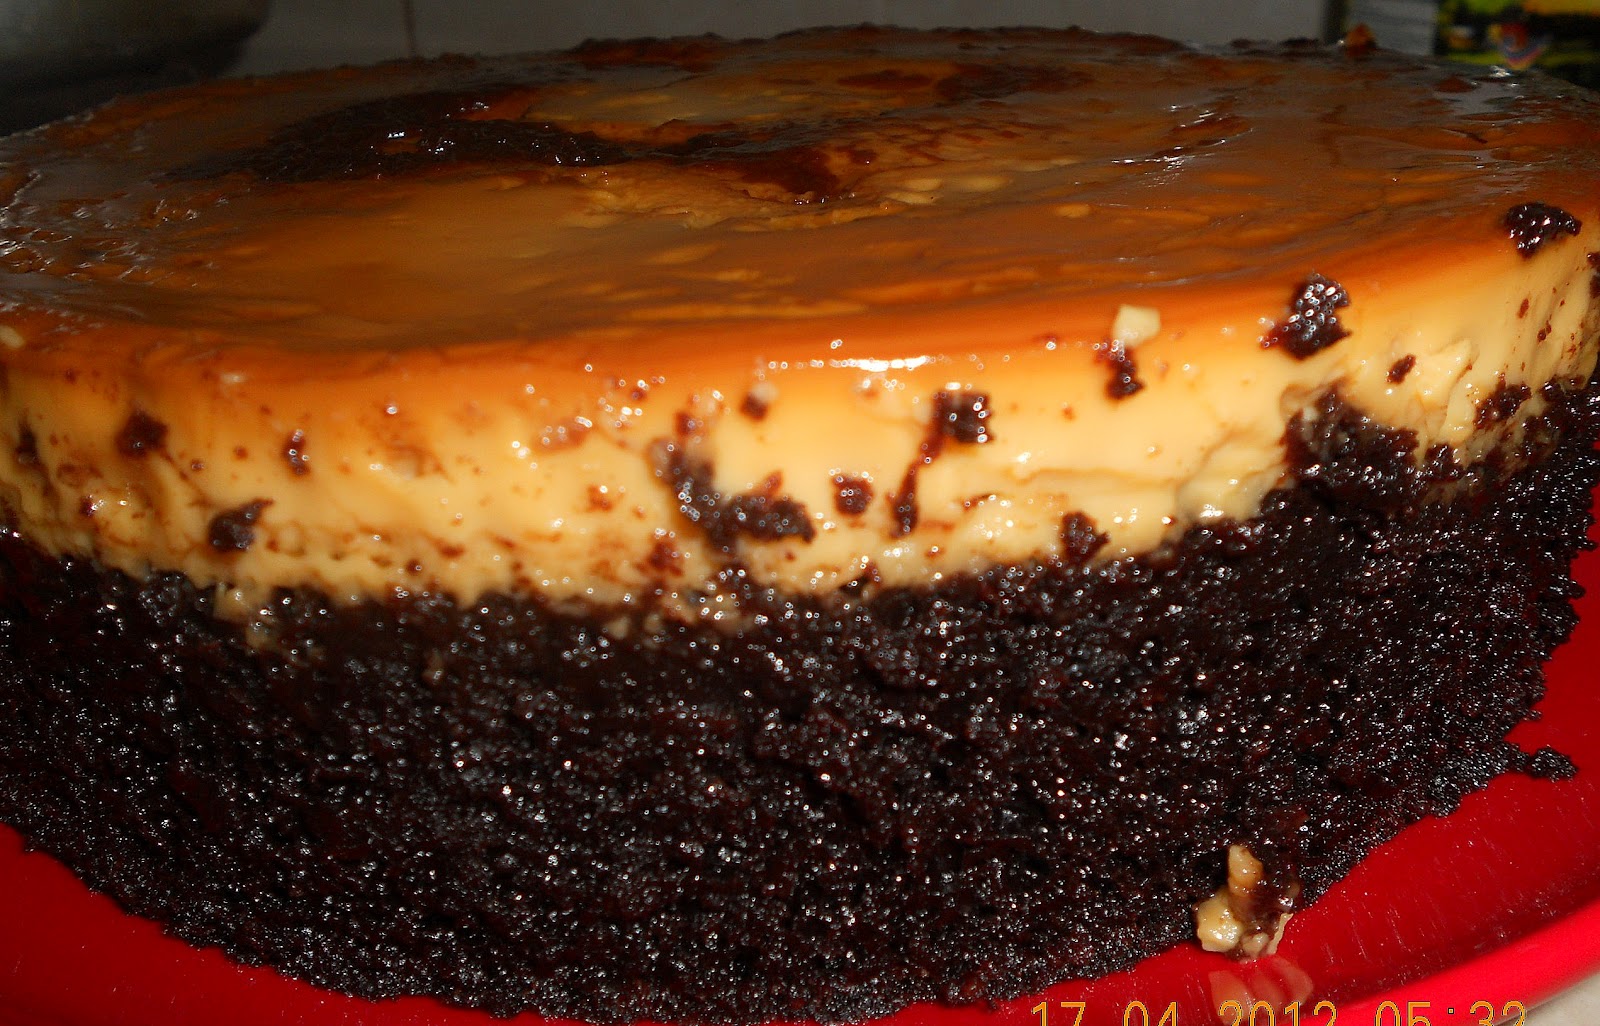 After 5.30 pm: keramel kek coklat